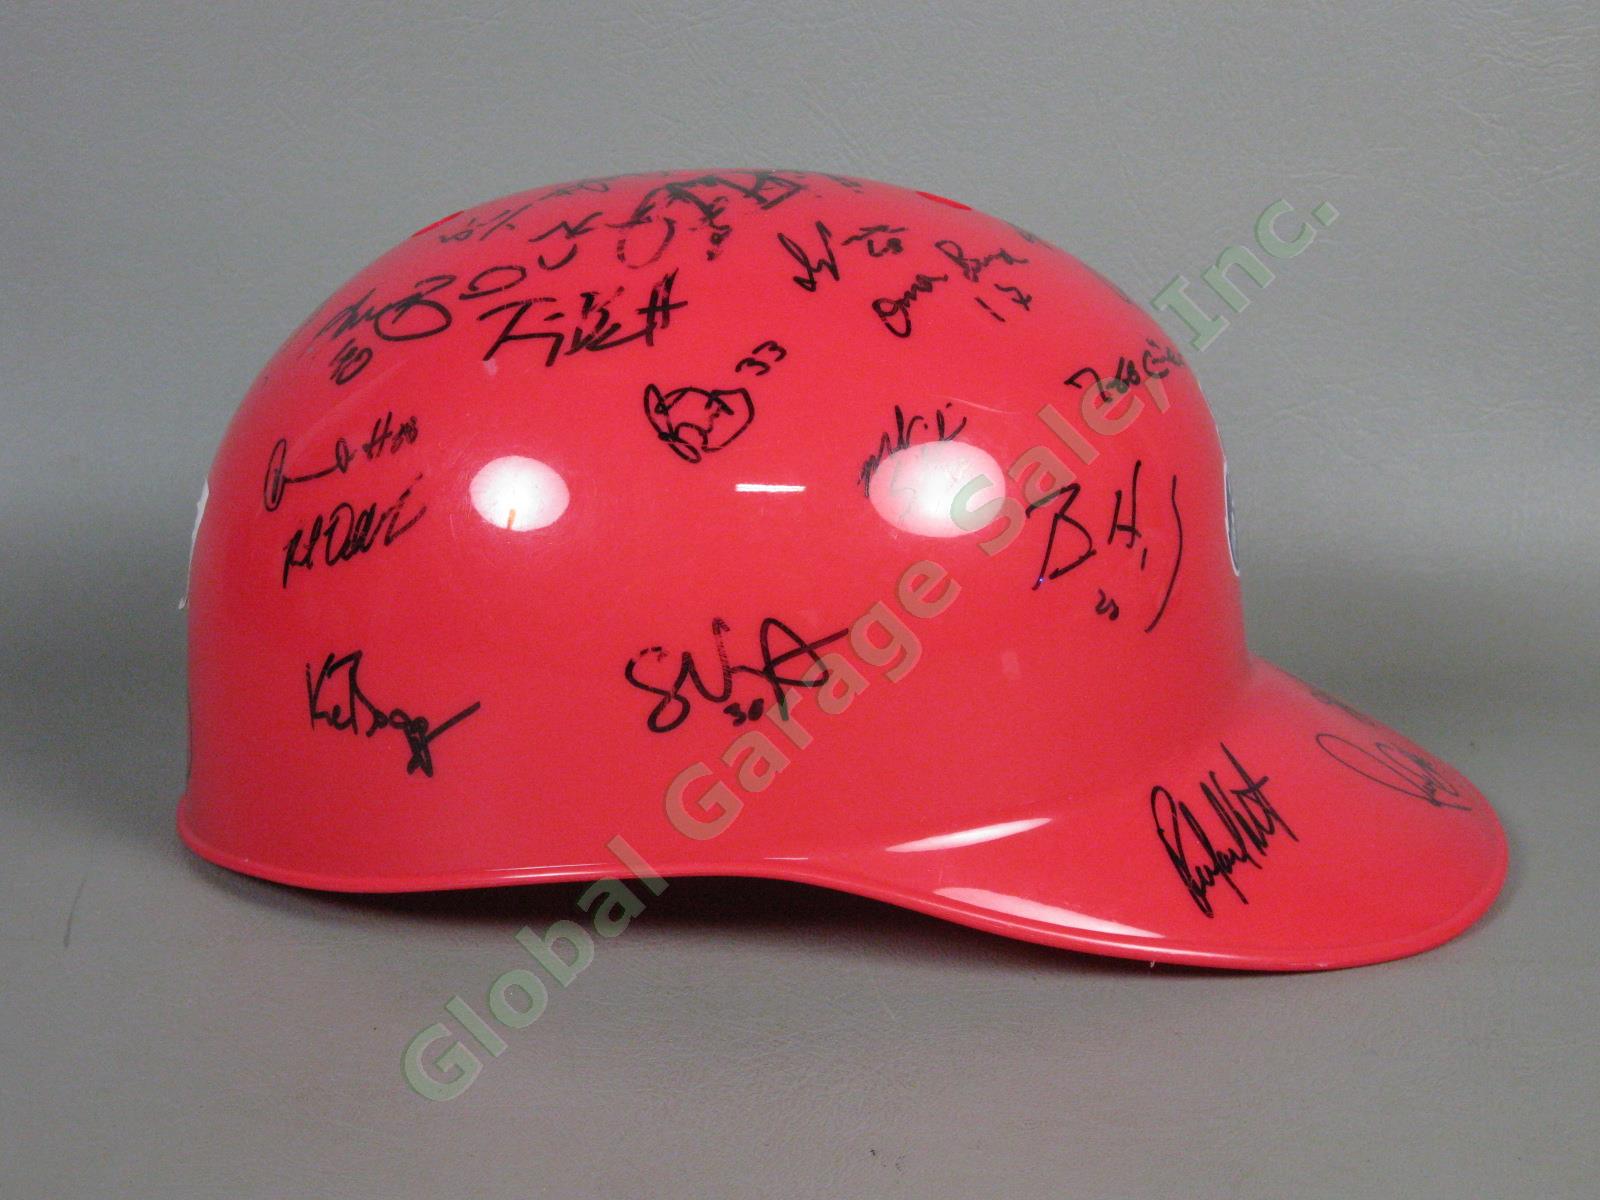 2007 Hudson Valley Renegades Team Signed Baseball Helmet NYPL Tampa Bay Rays NR 1